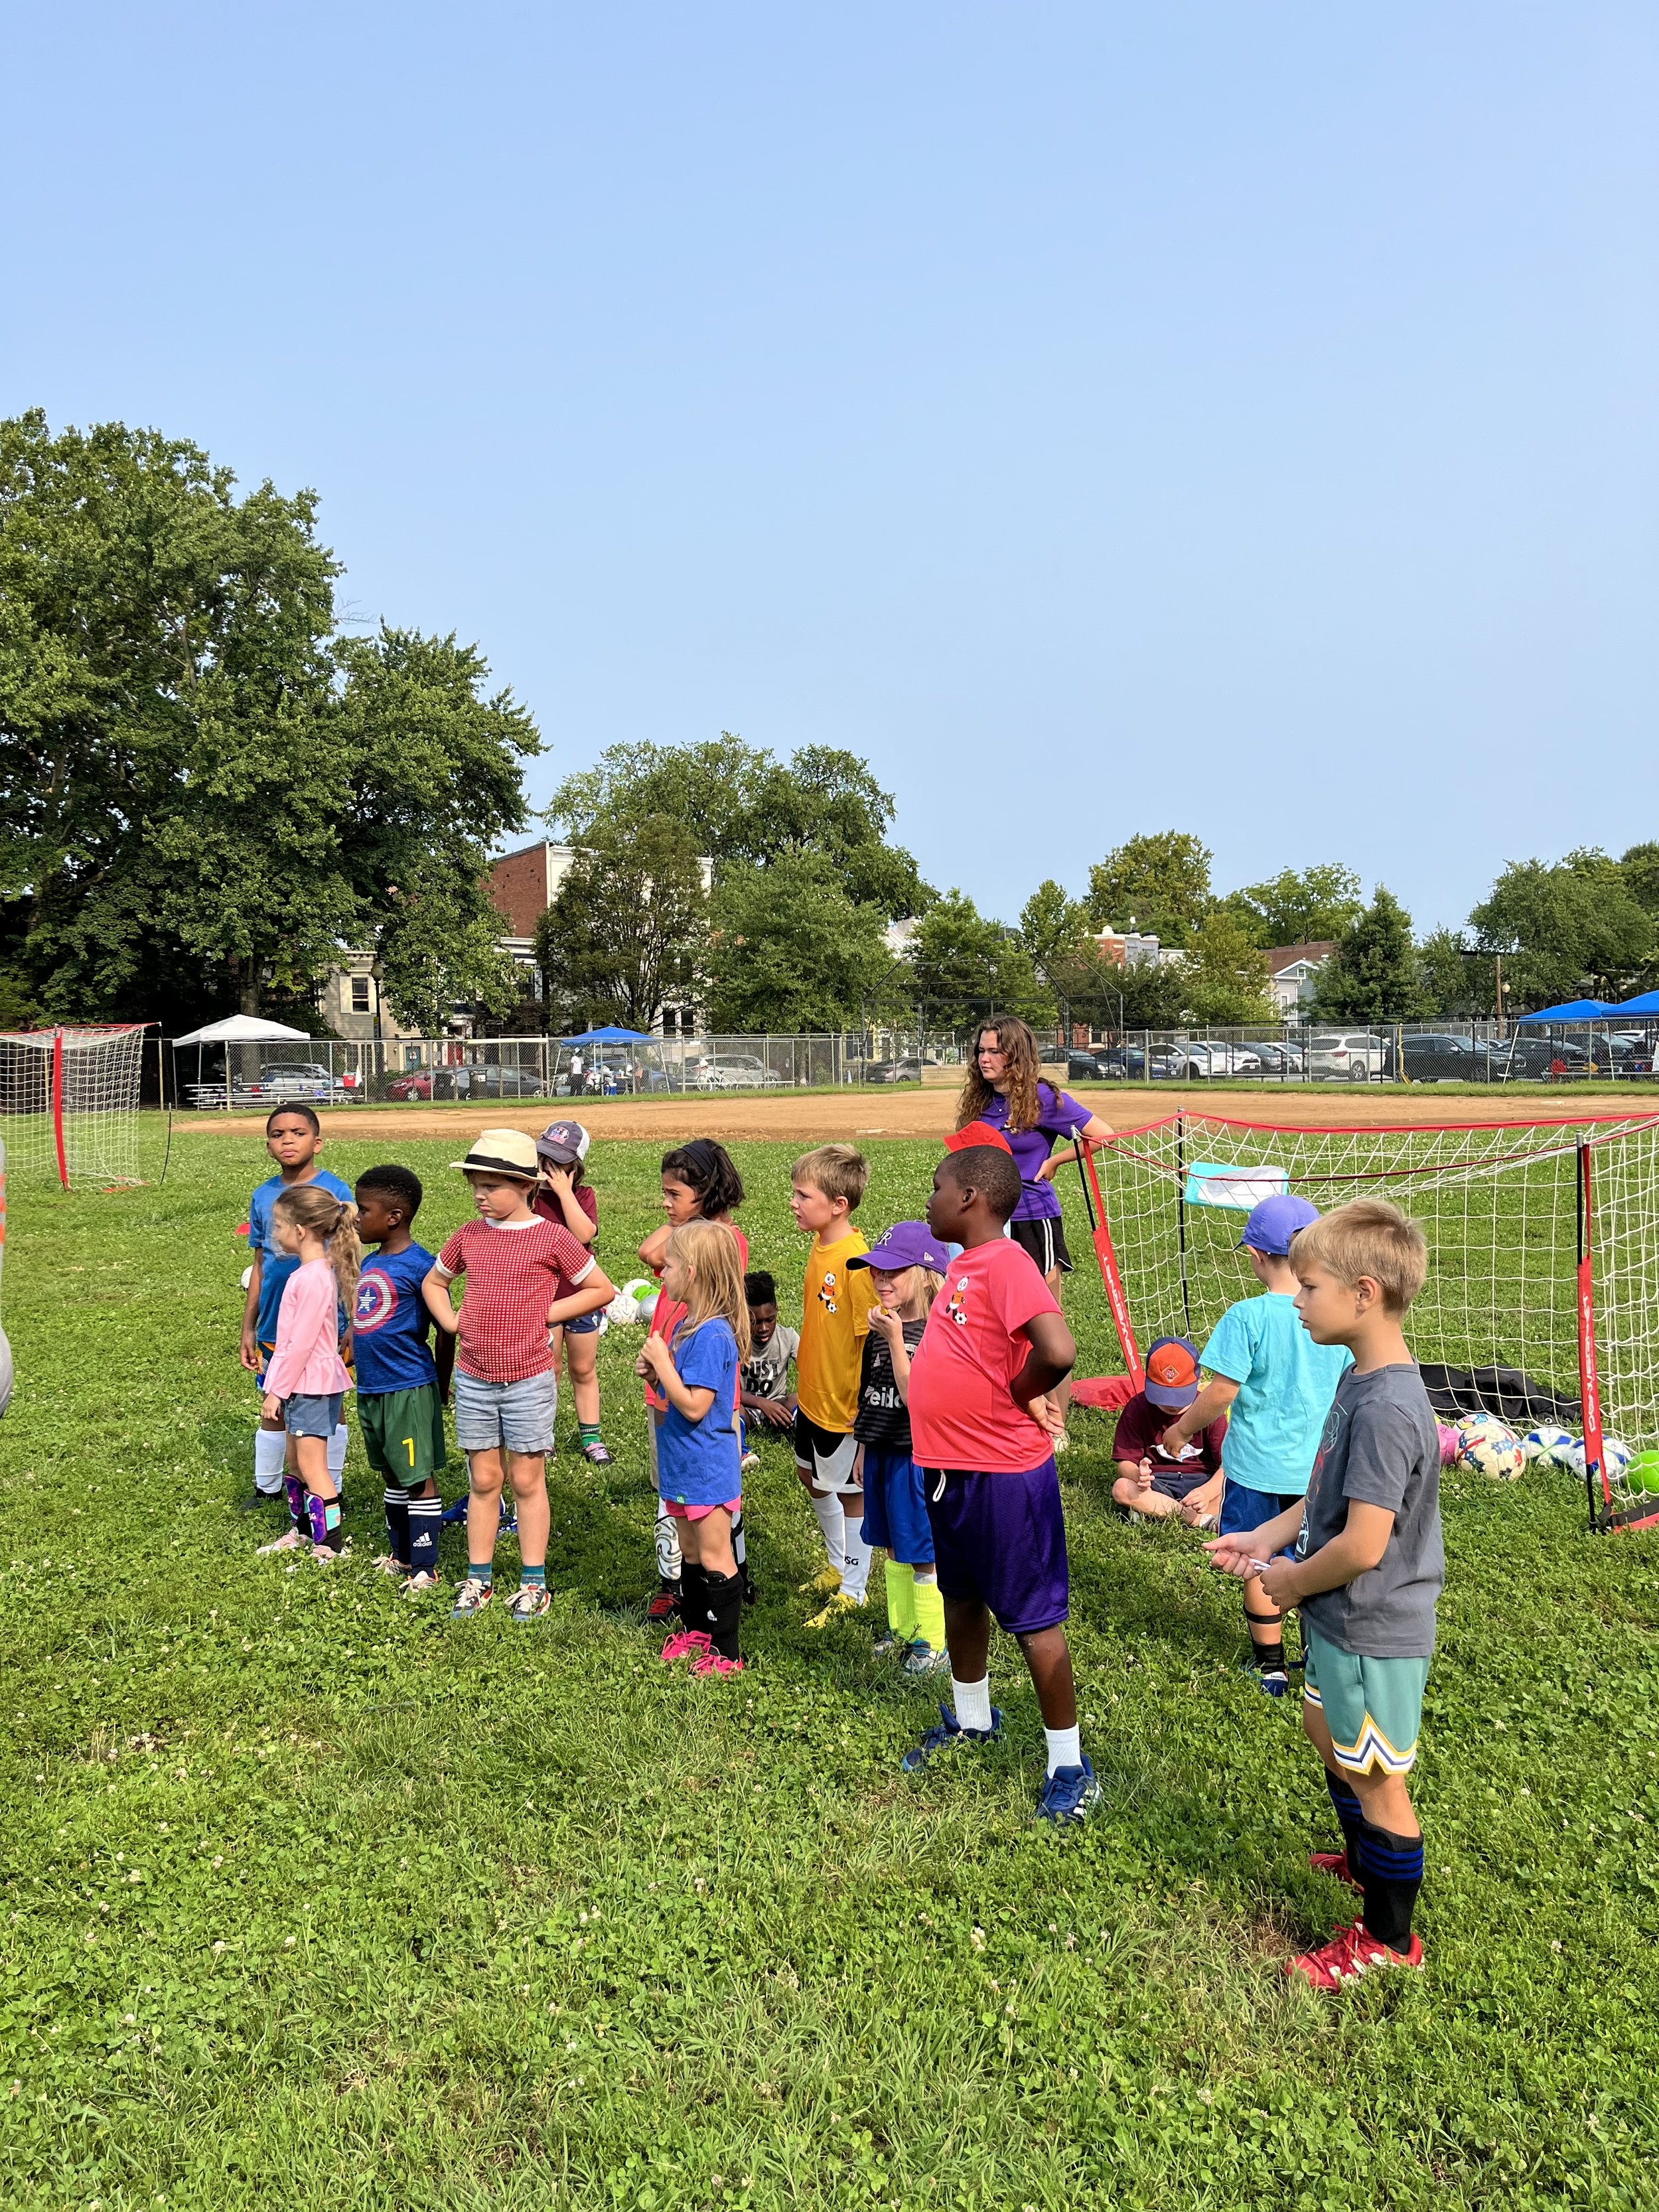 Dc-way-soccer-club-for-kids-in-washington-dc-summer-camp-at-tyler-elementary-school- 8997.jpeg